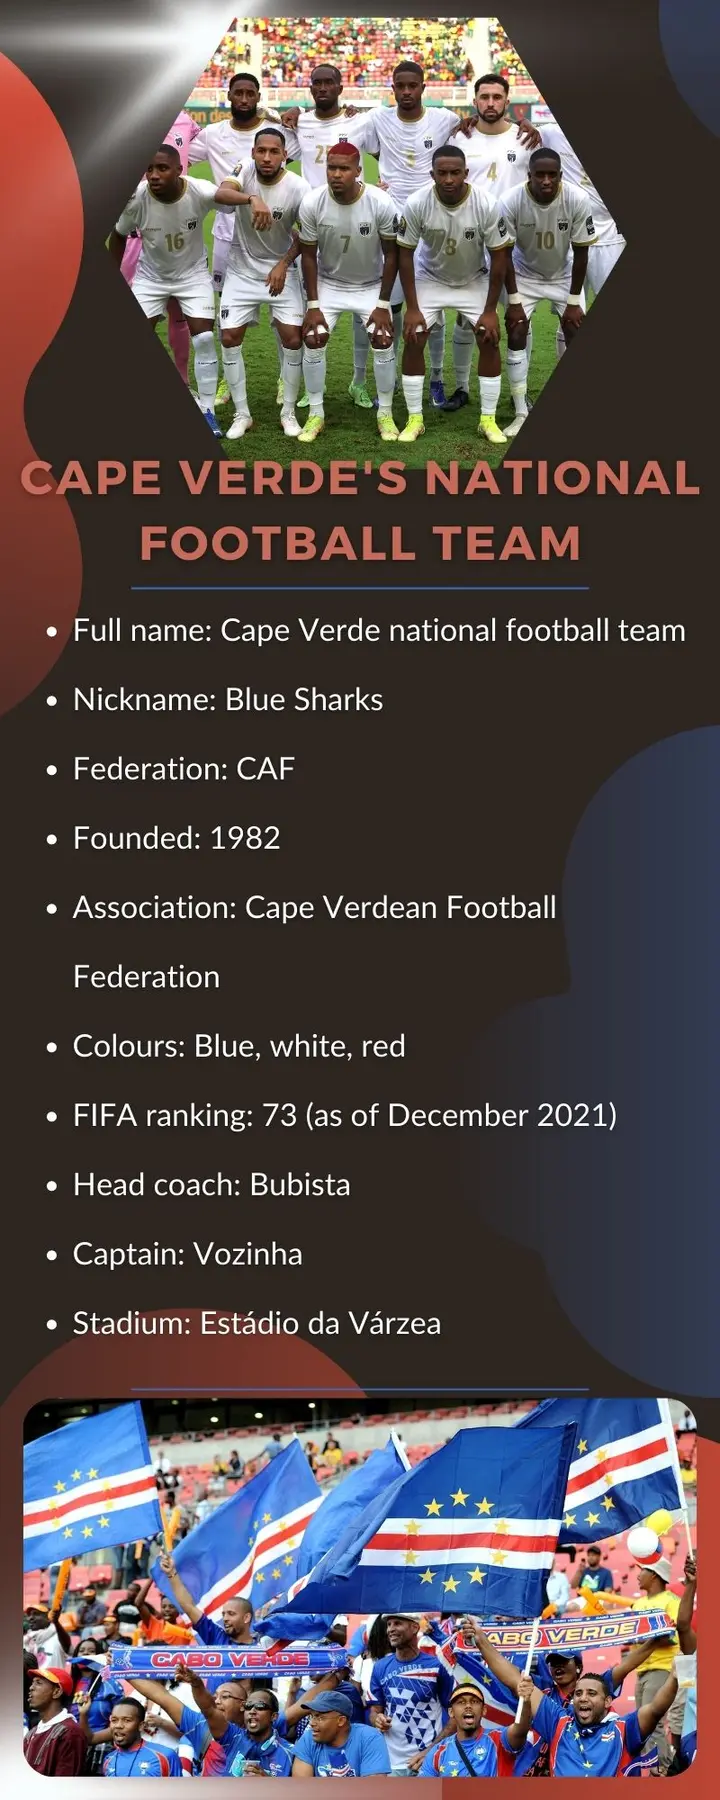 Cape Verde's national football team